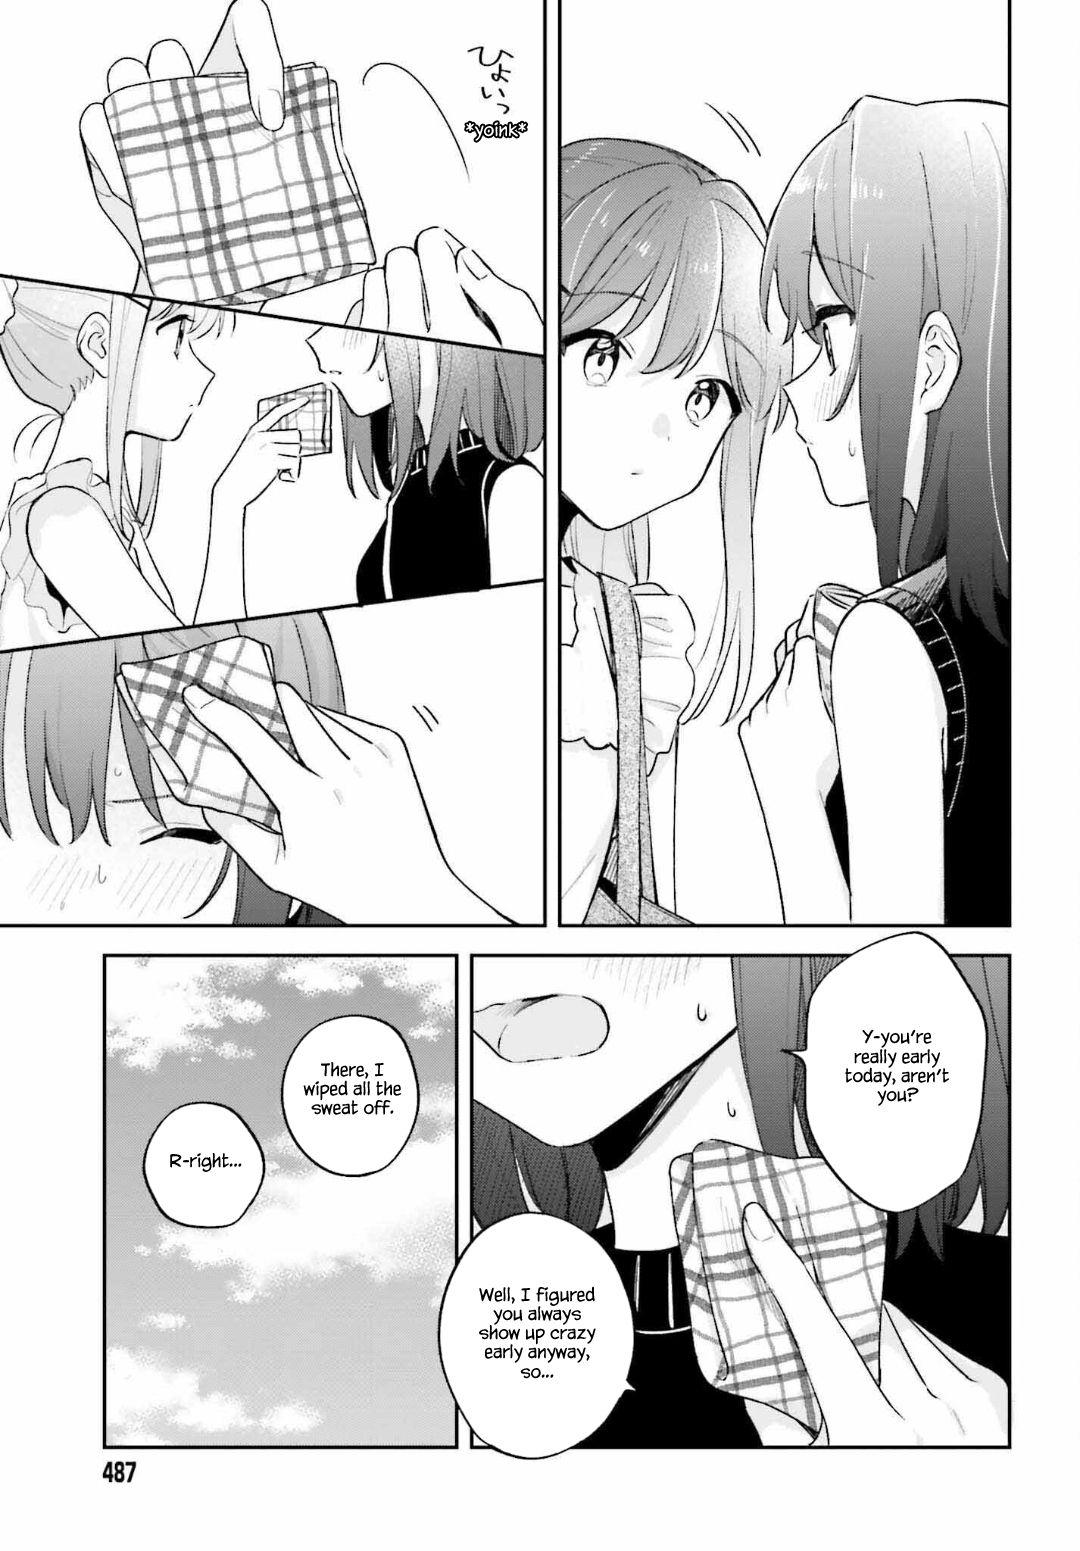 Adachi and Shimamura, Vol. 4 (Manga)